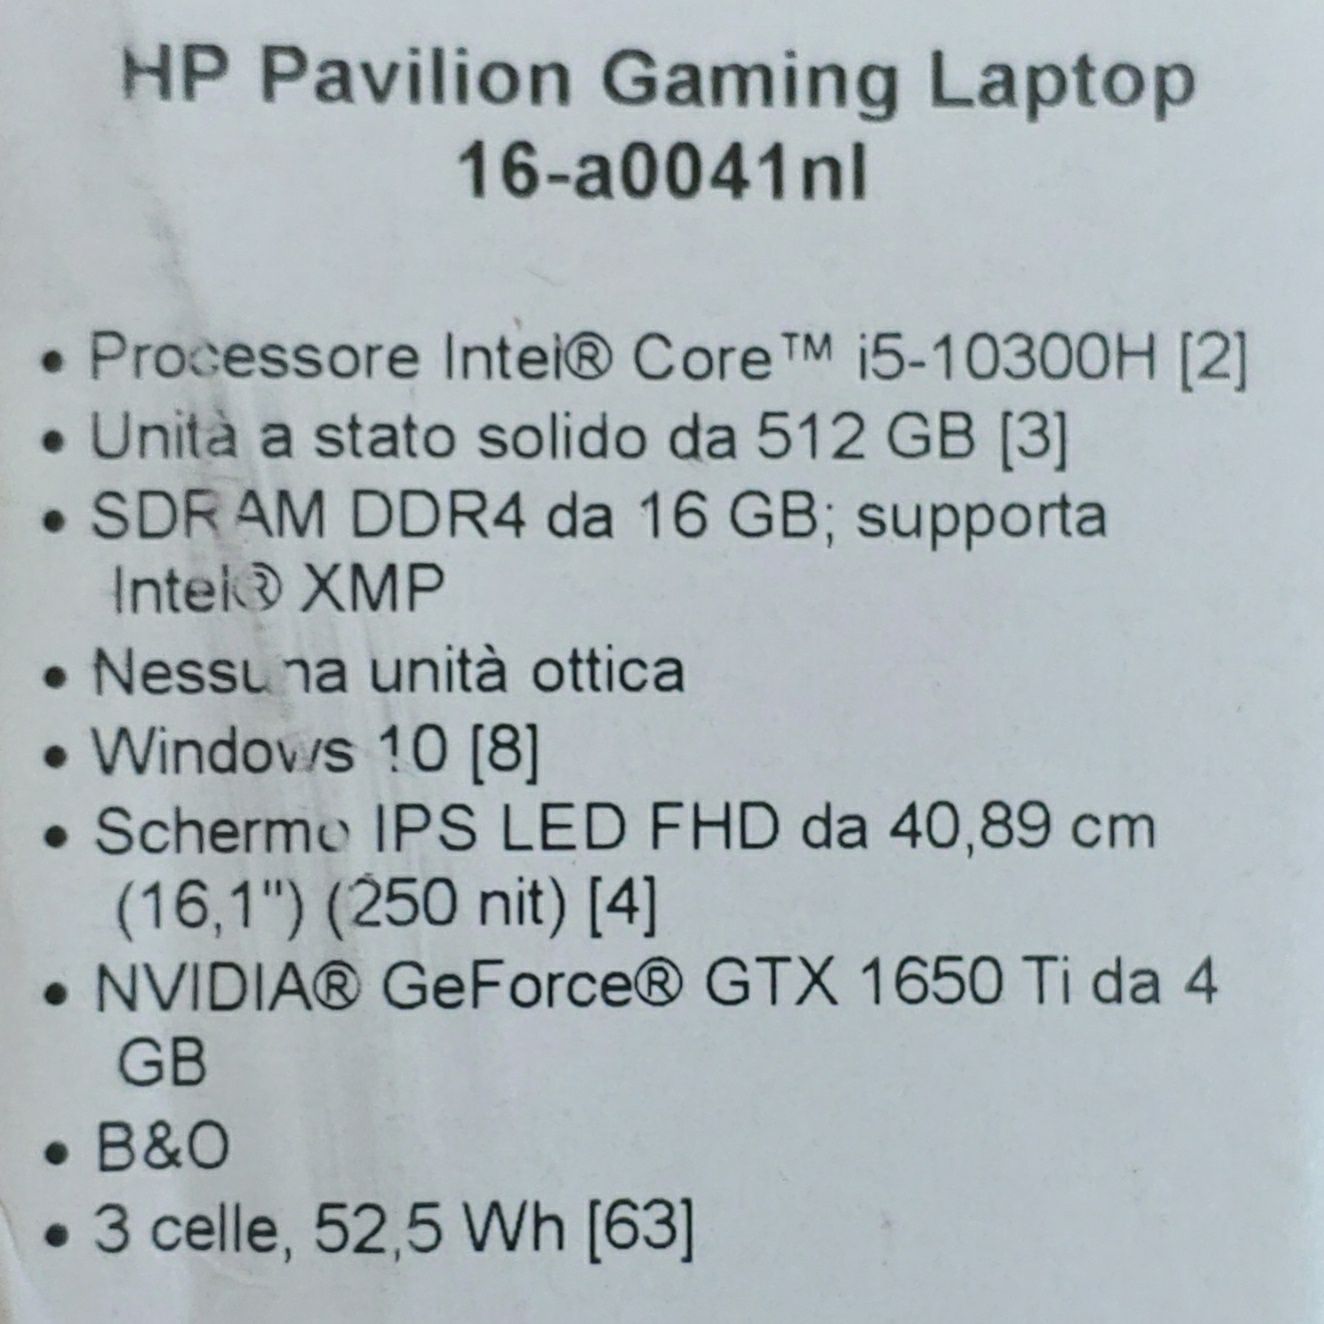 HP Pavilion Gaming Laptop

16-a0041nl